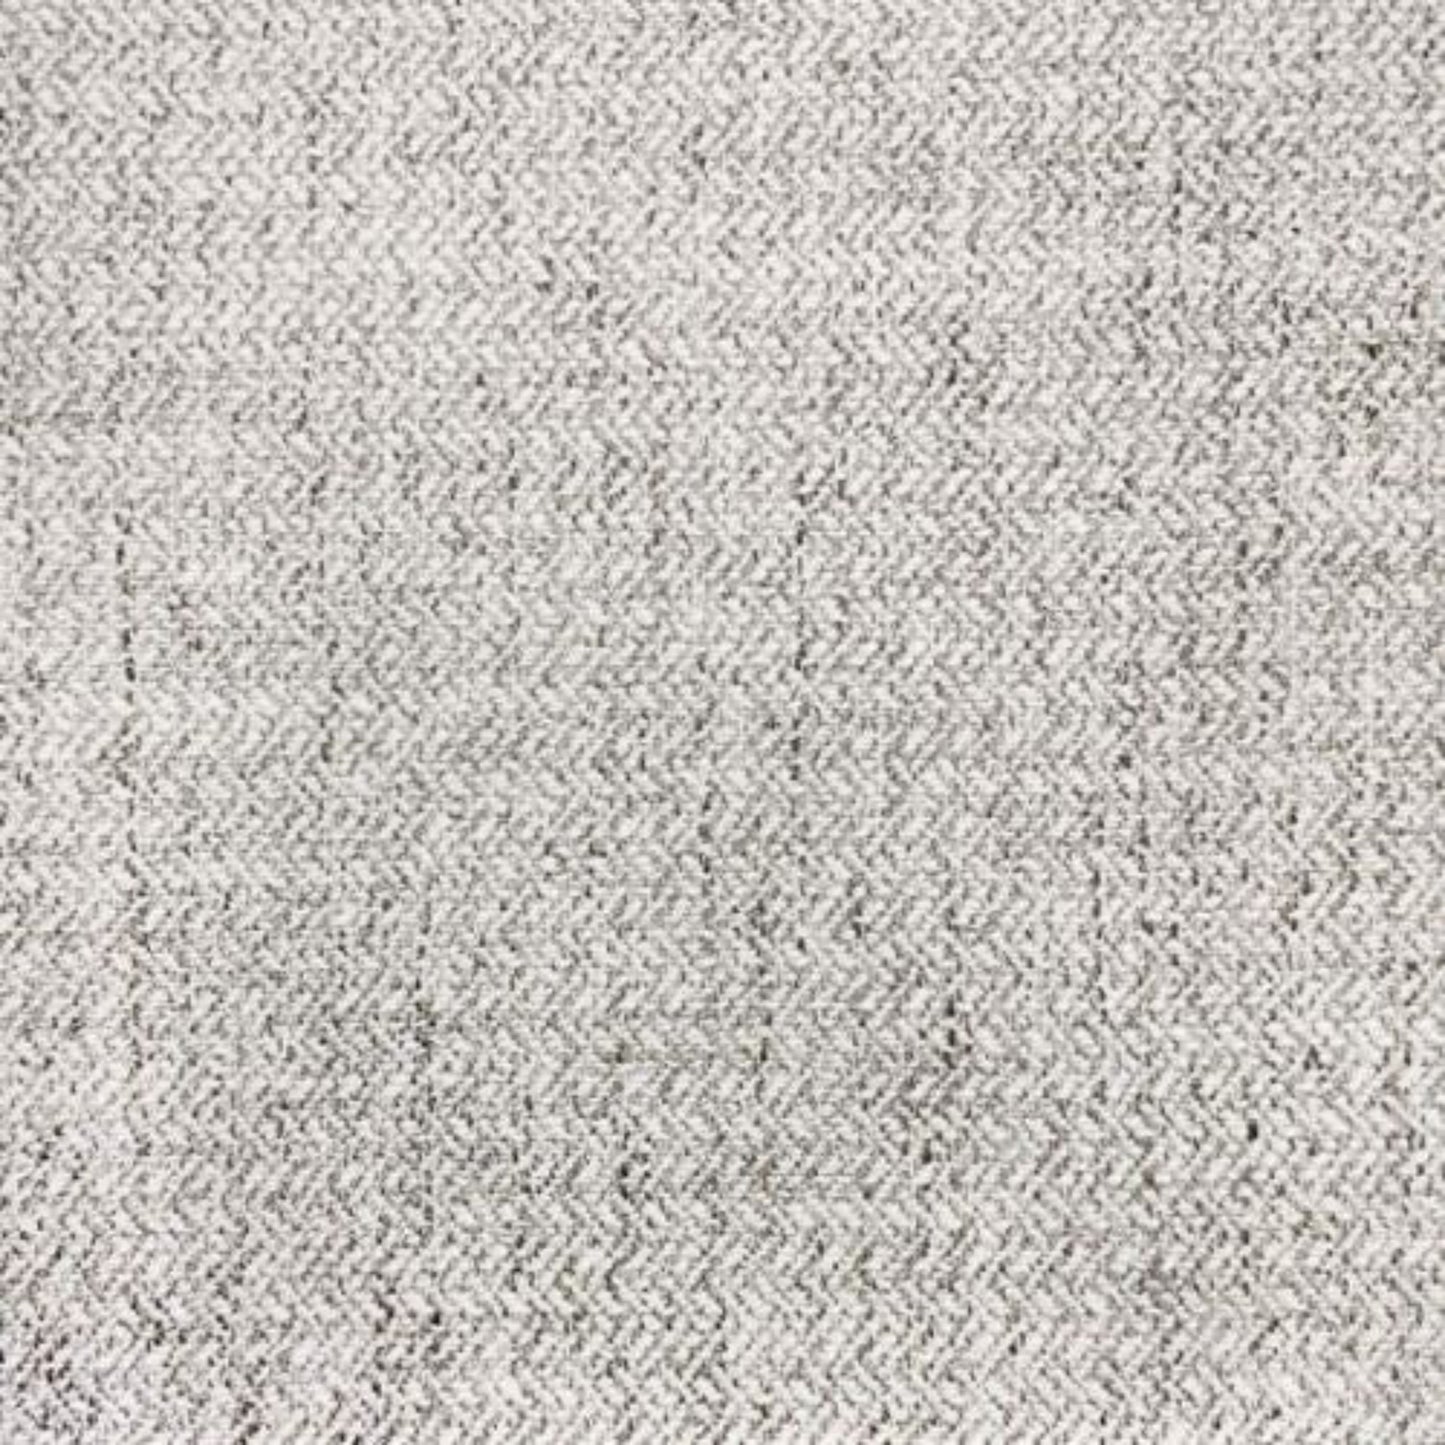 Carson grey polyester blend fabric sofa